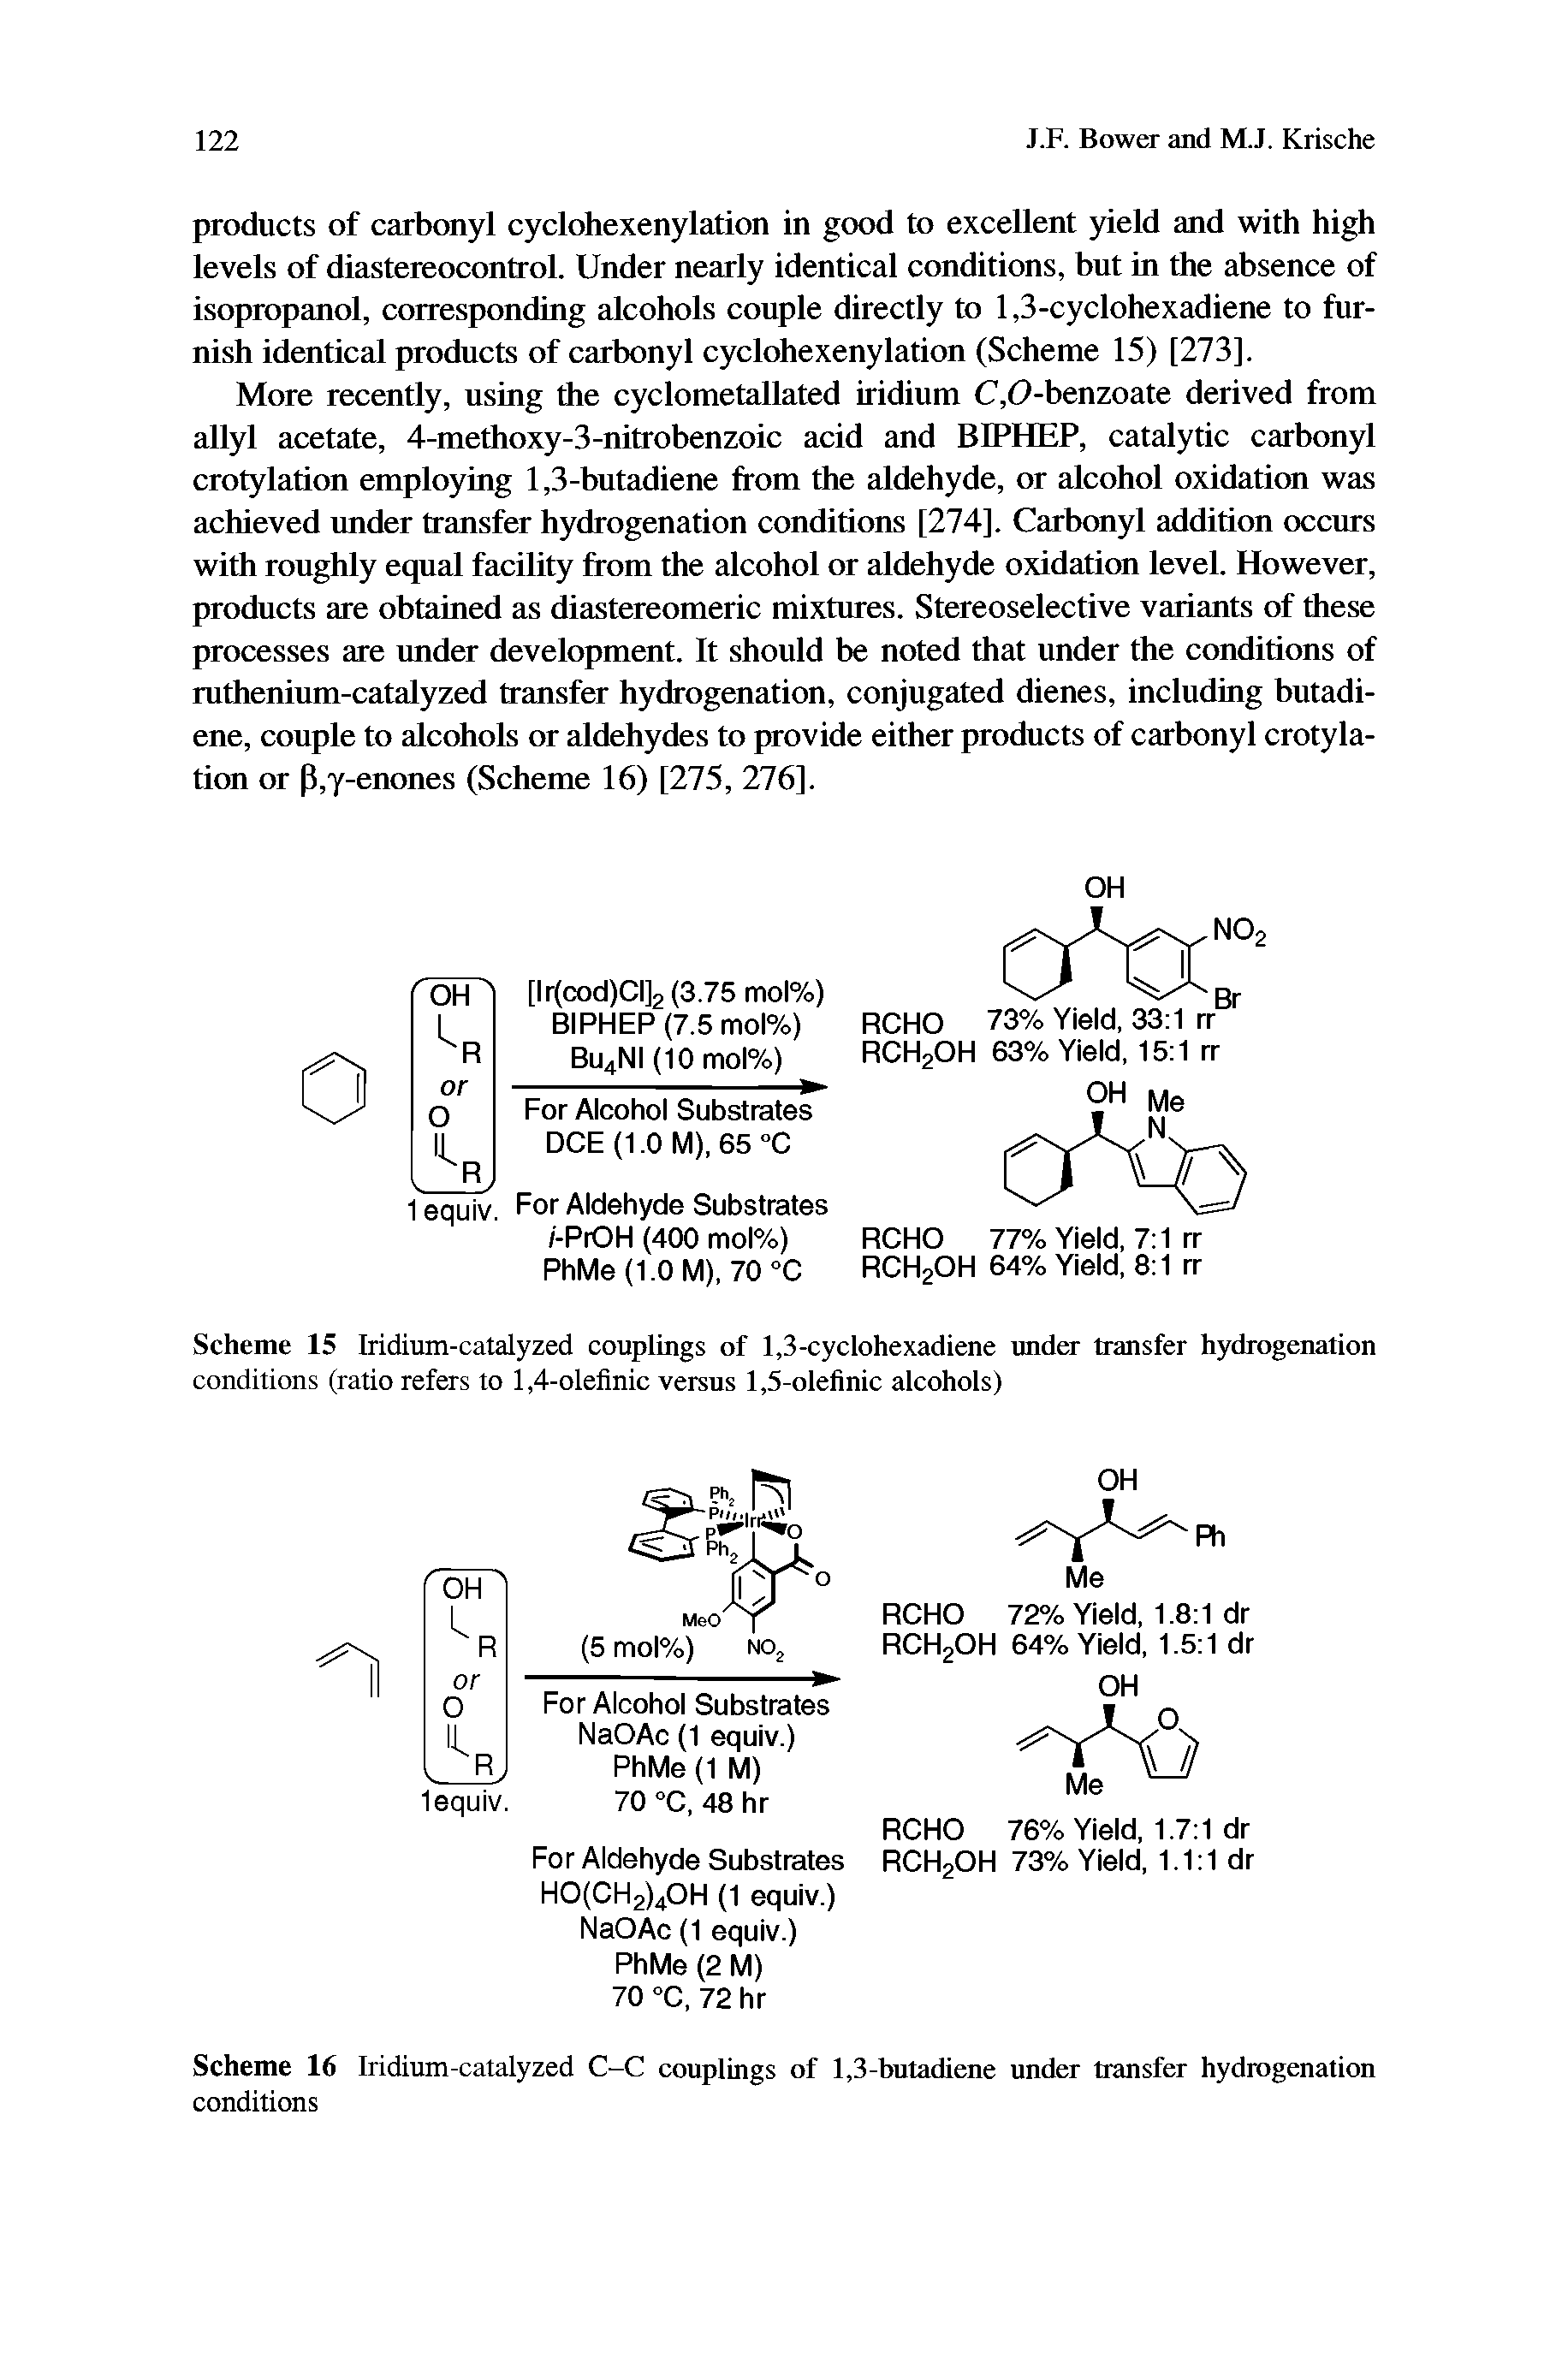 Scheme 15 Iridium-catalyzed couplings of 1,3-cyclohexadiene under transfer hydrogenation conditions (ratio refers to 1,4-oIefinic versus 1,5-olefinic alcohols)...